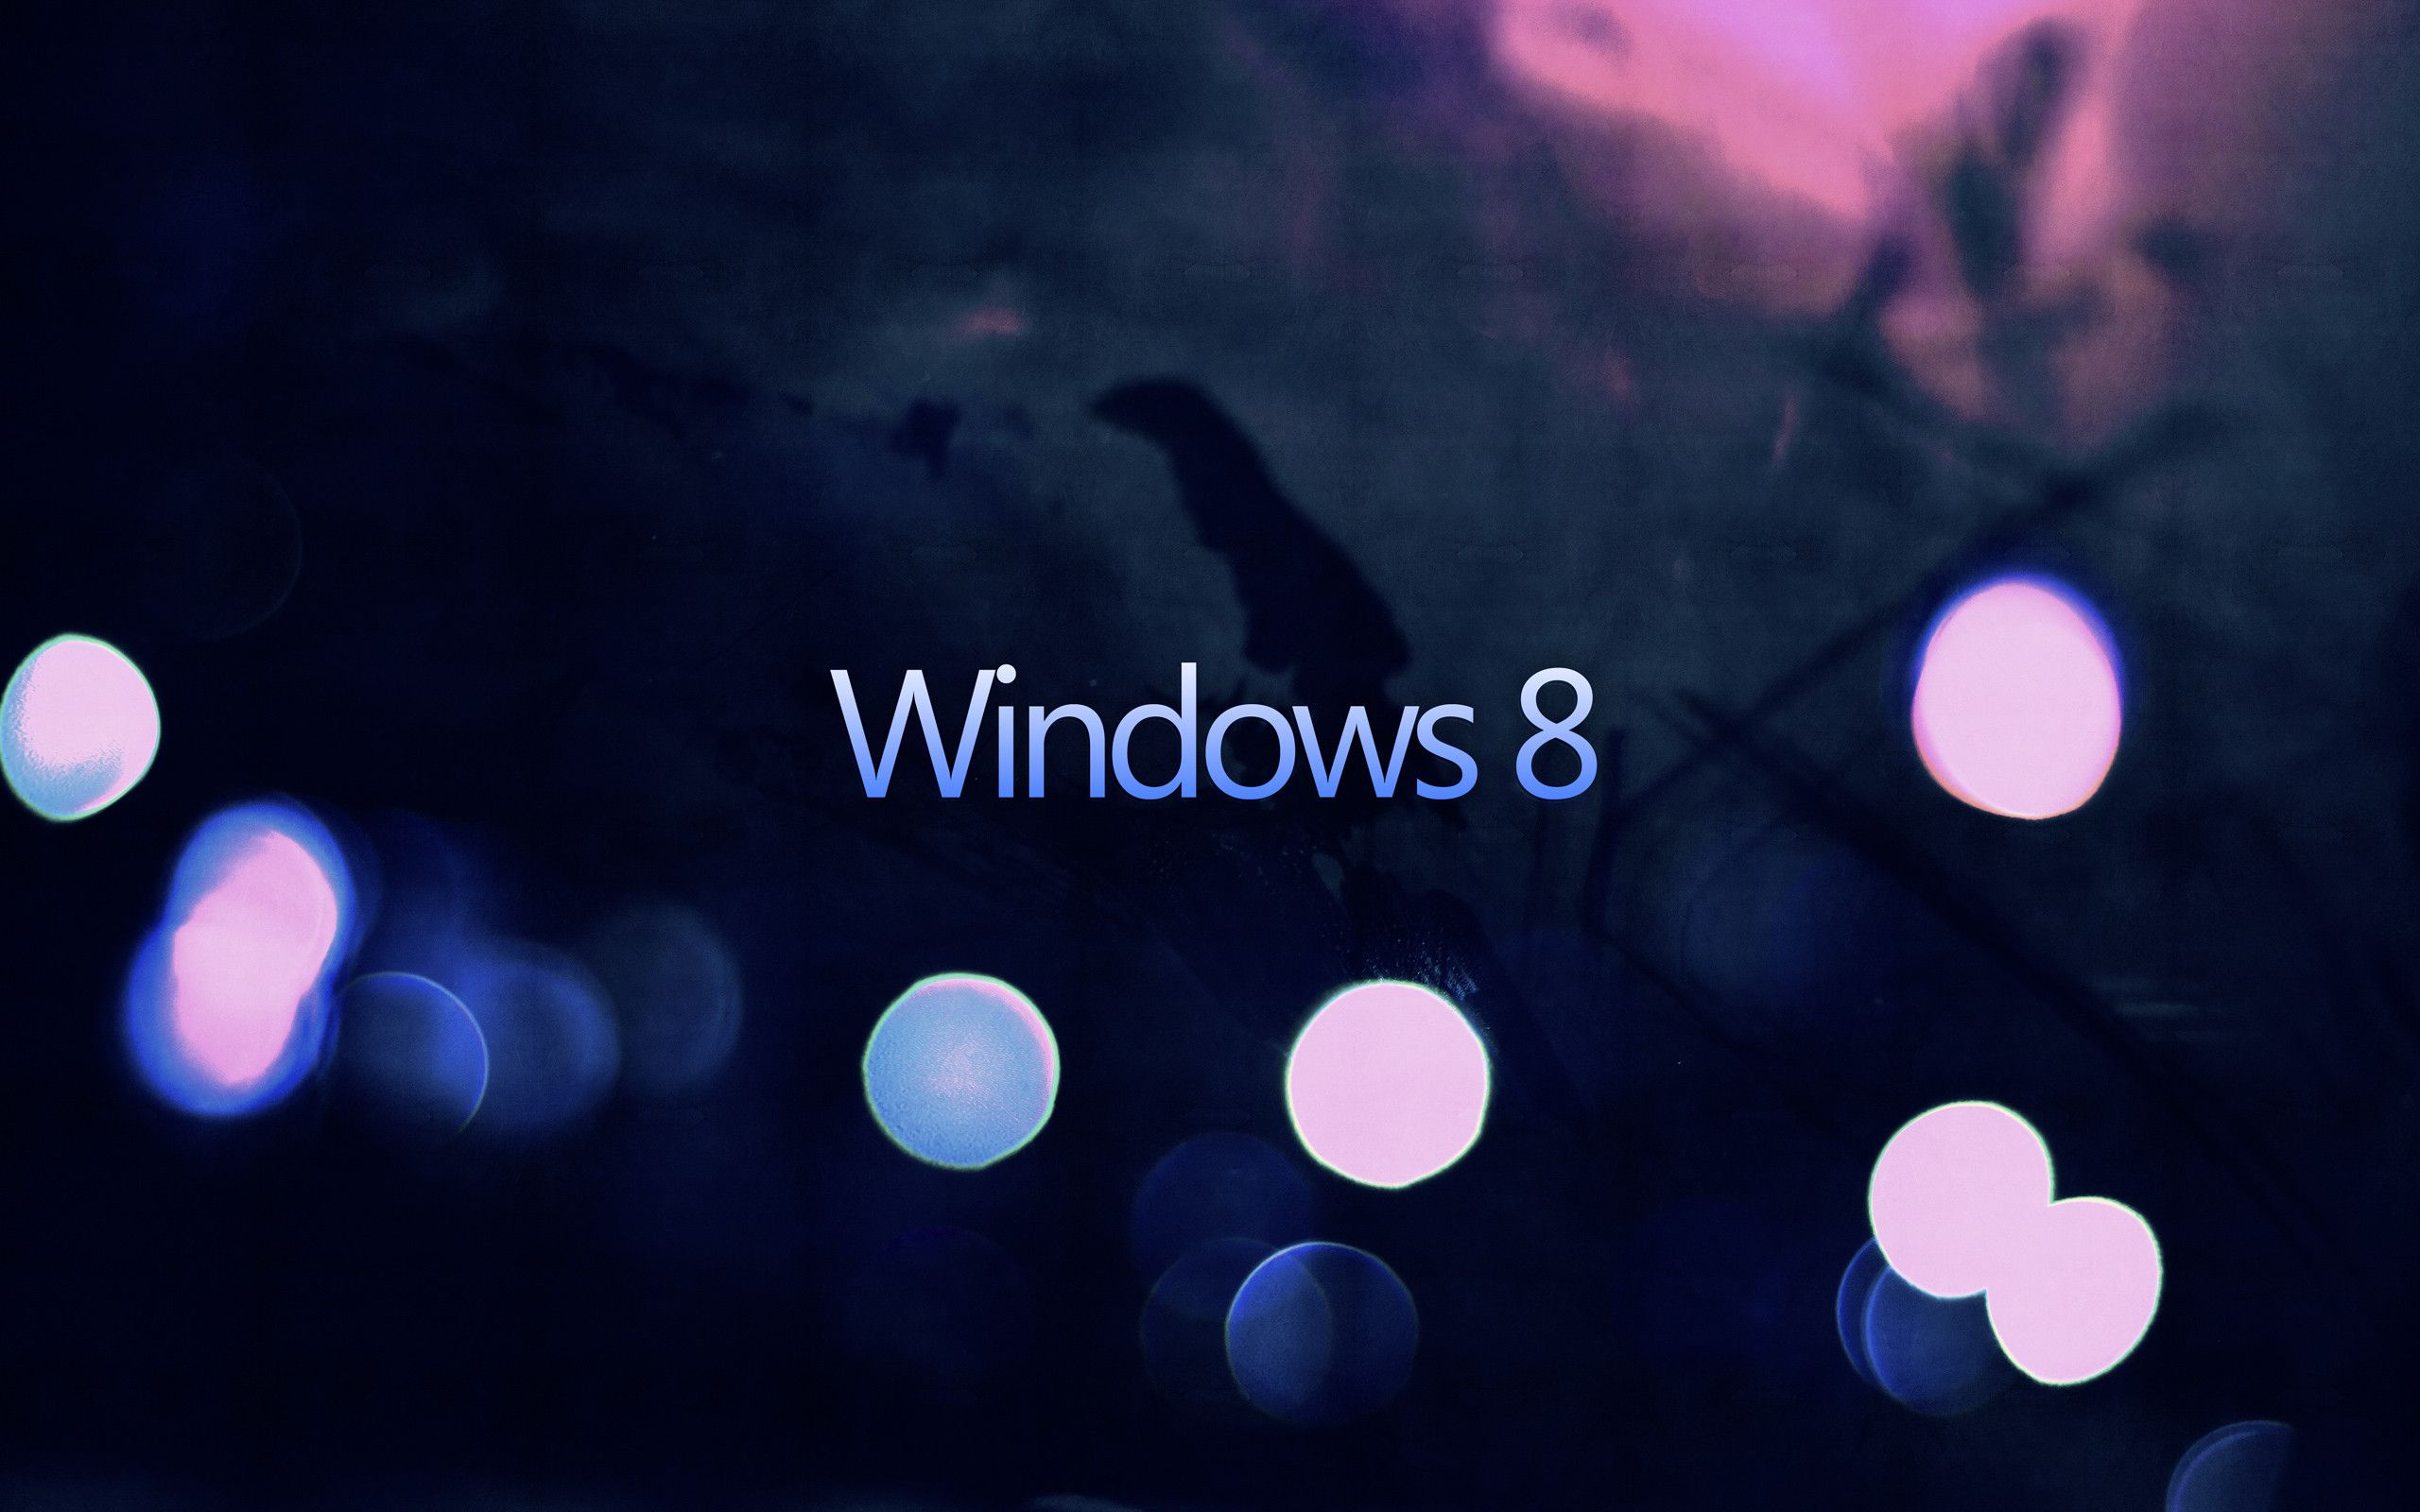 windows 8 wallpaper hd 1080p download #19